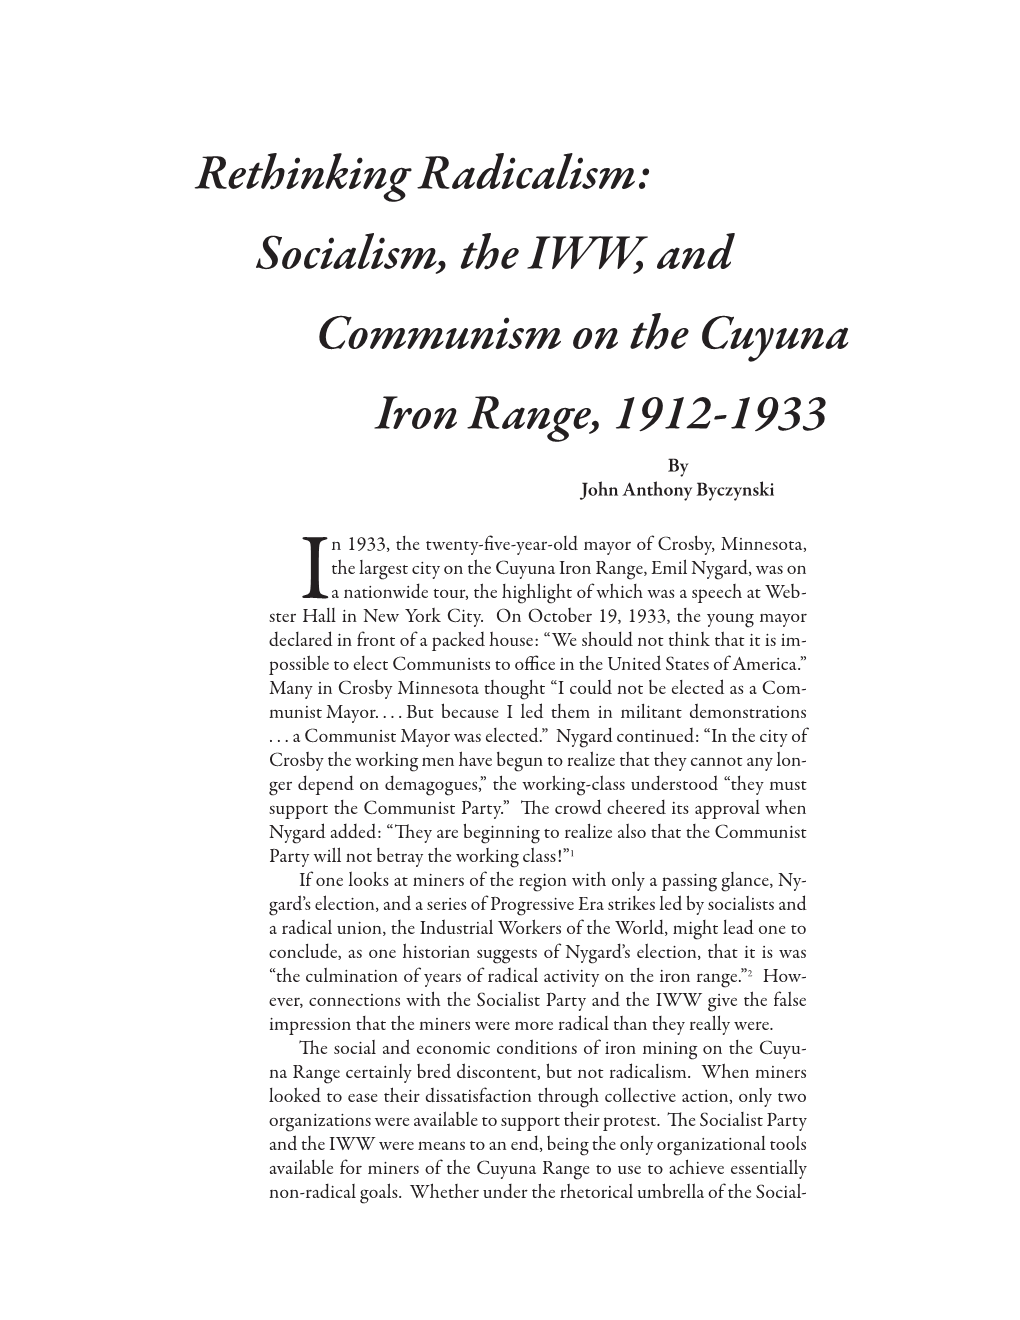 Socialism, the IWW, and Communism on the Cuyuna Iron Range, 1912-1933 by John Anthony Byczynski